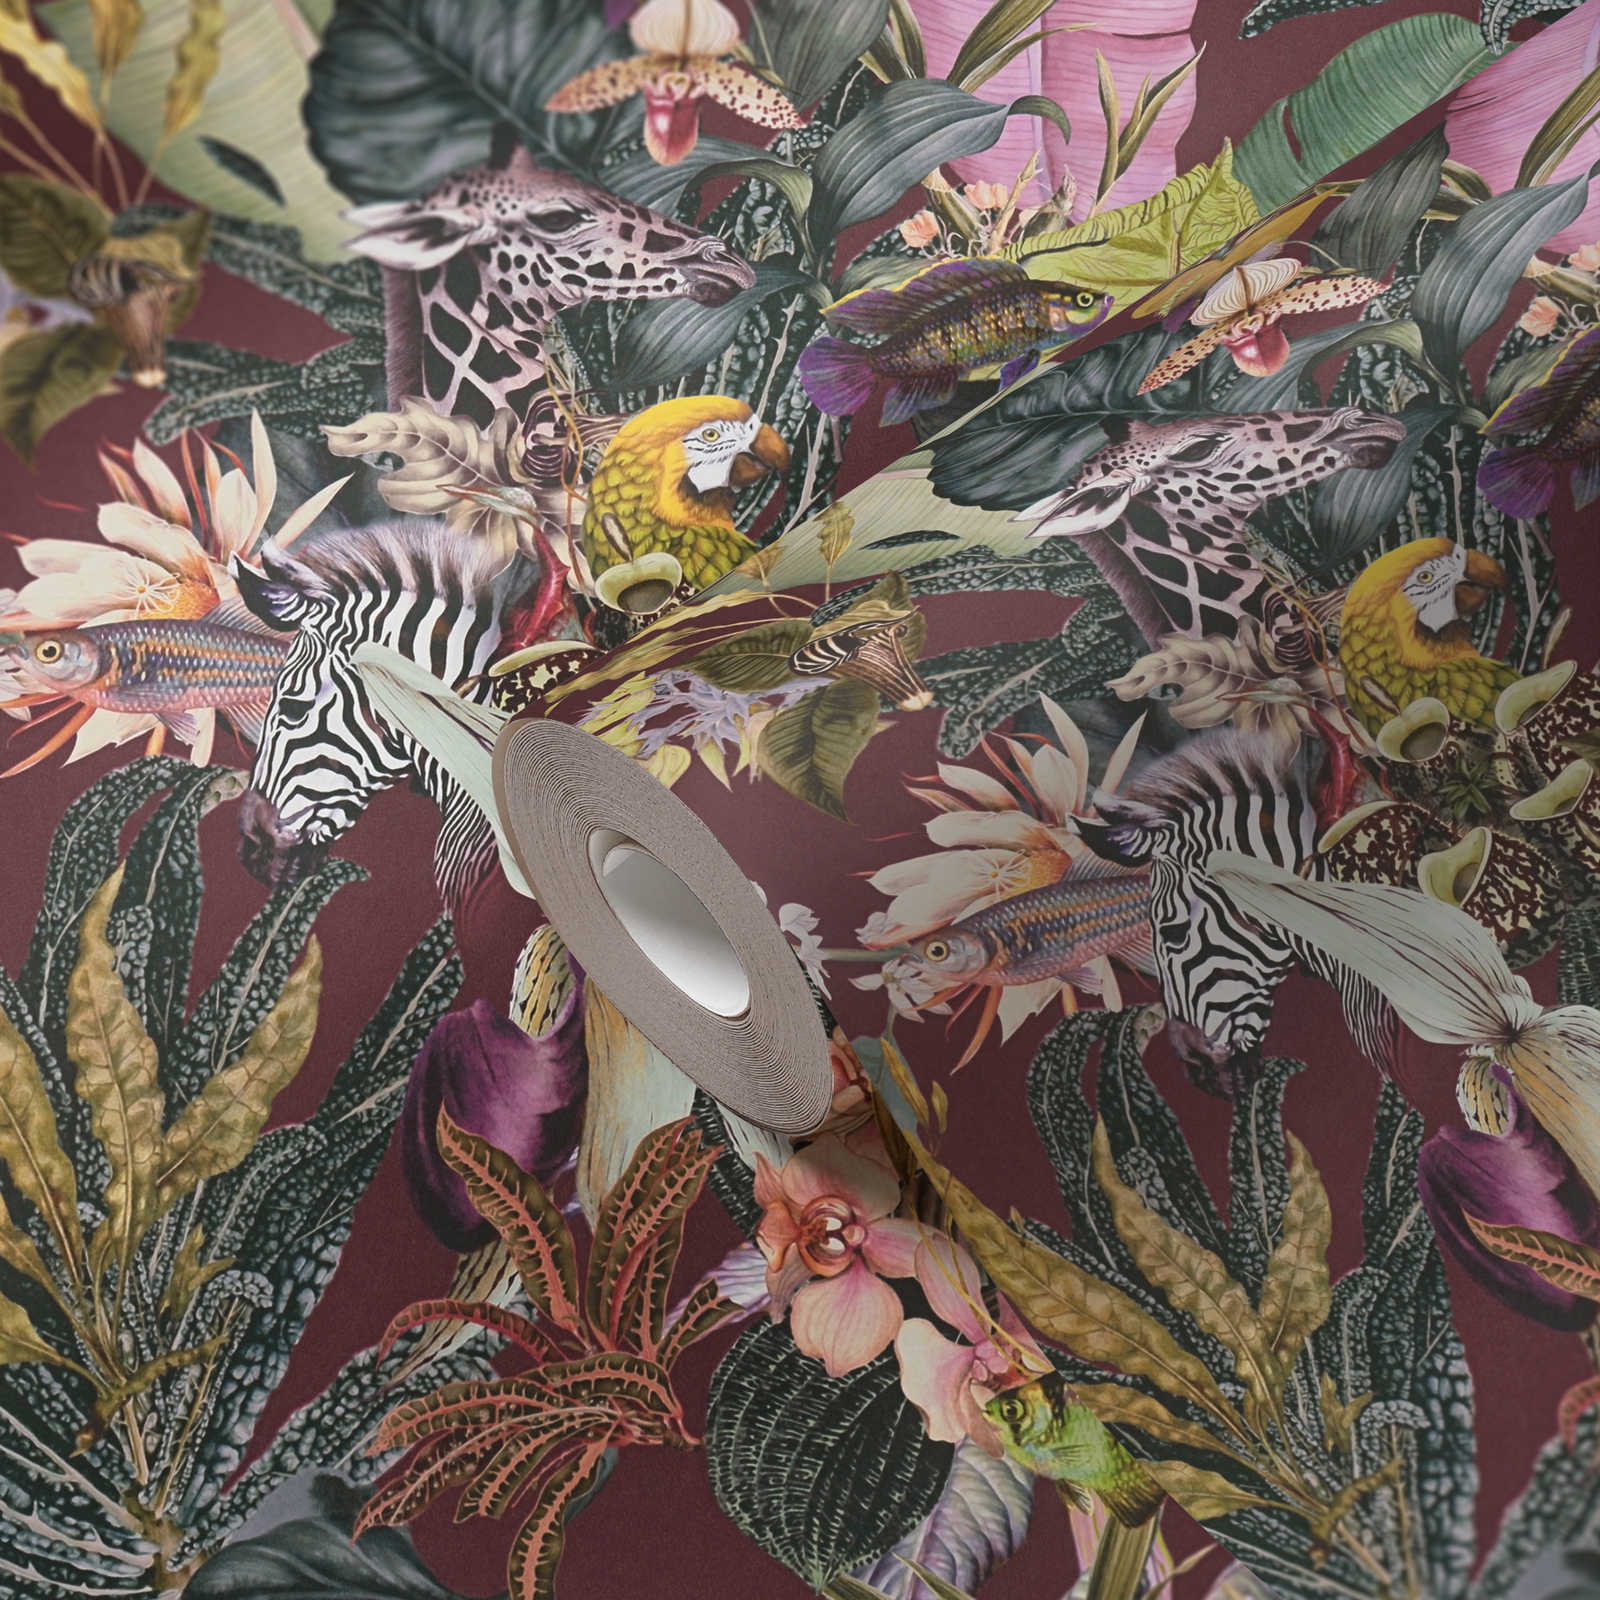             Jungle wallpaper flowers & animals - green, dark red
        